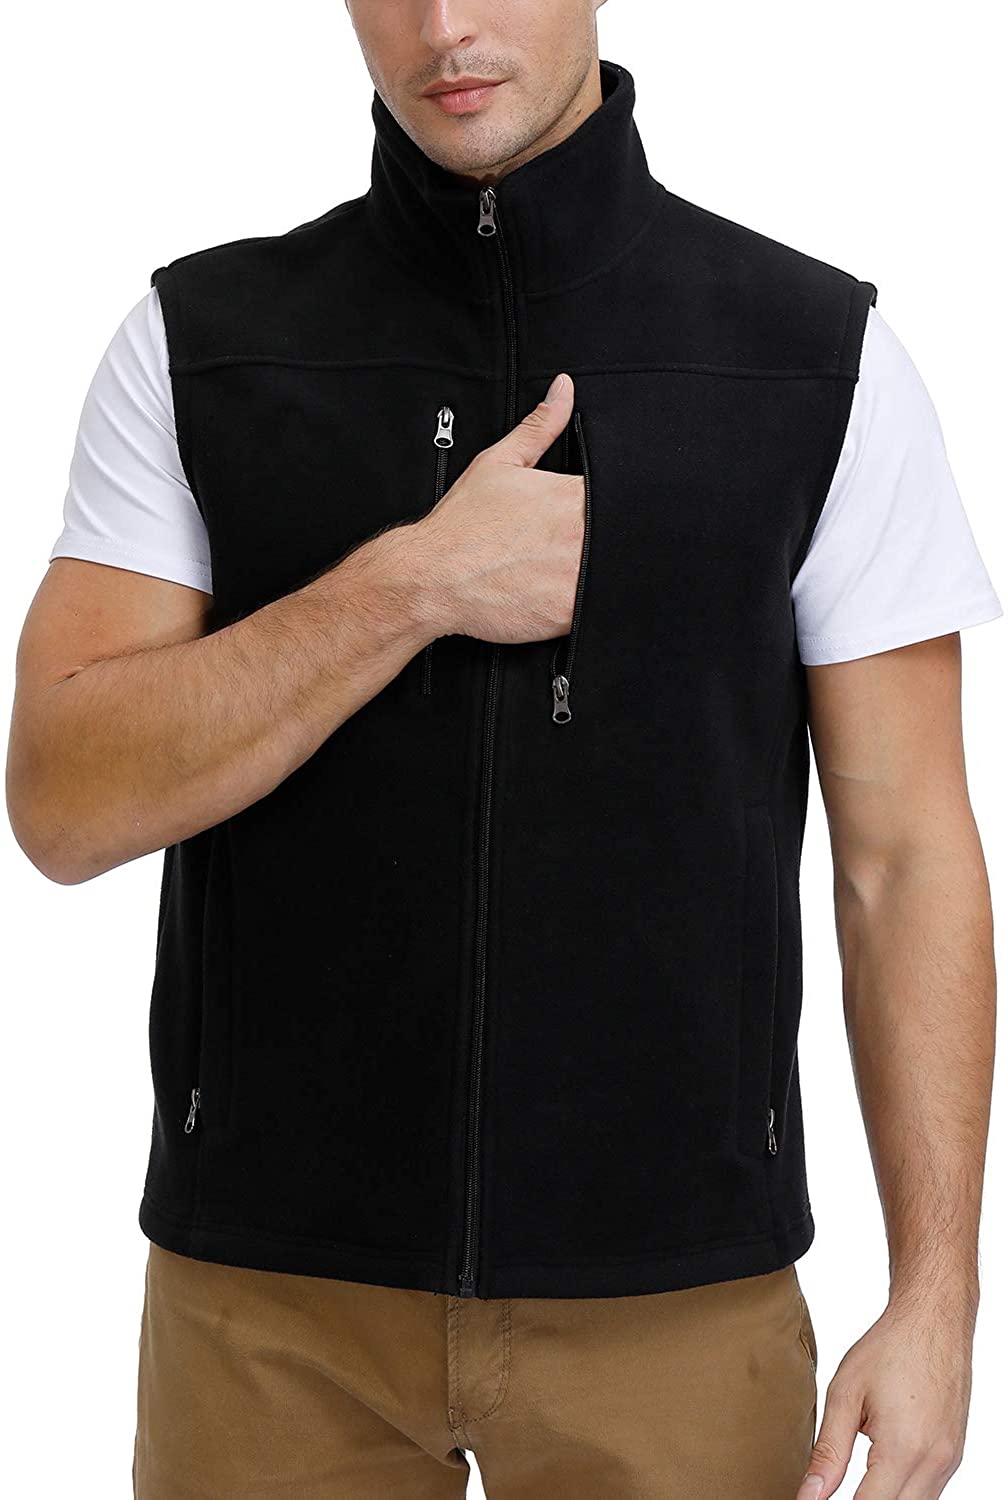 AIEOE Men's Fleece Vests Full-Zip Up Jackets Sleeveless Softshell Outerwear 